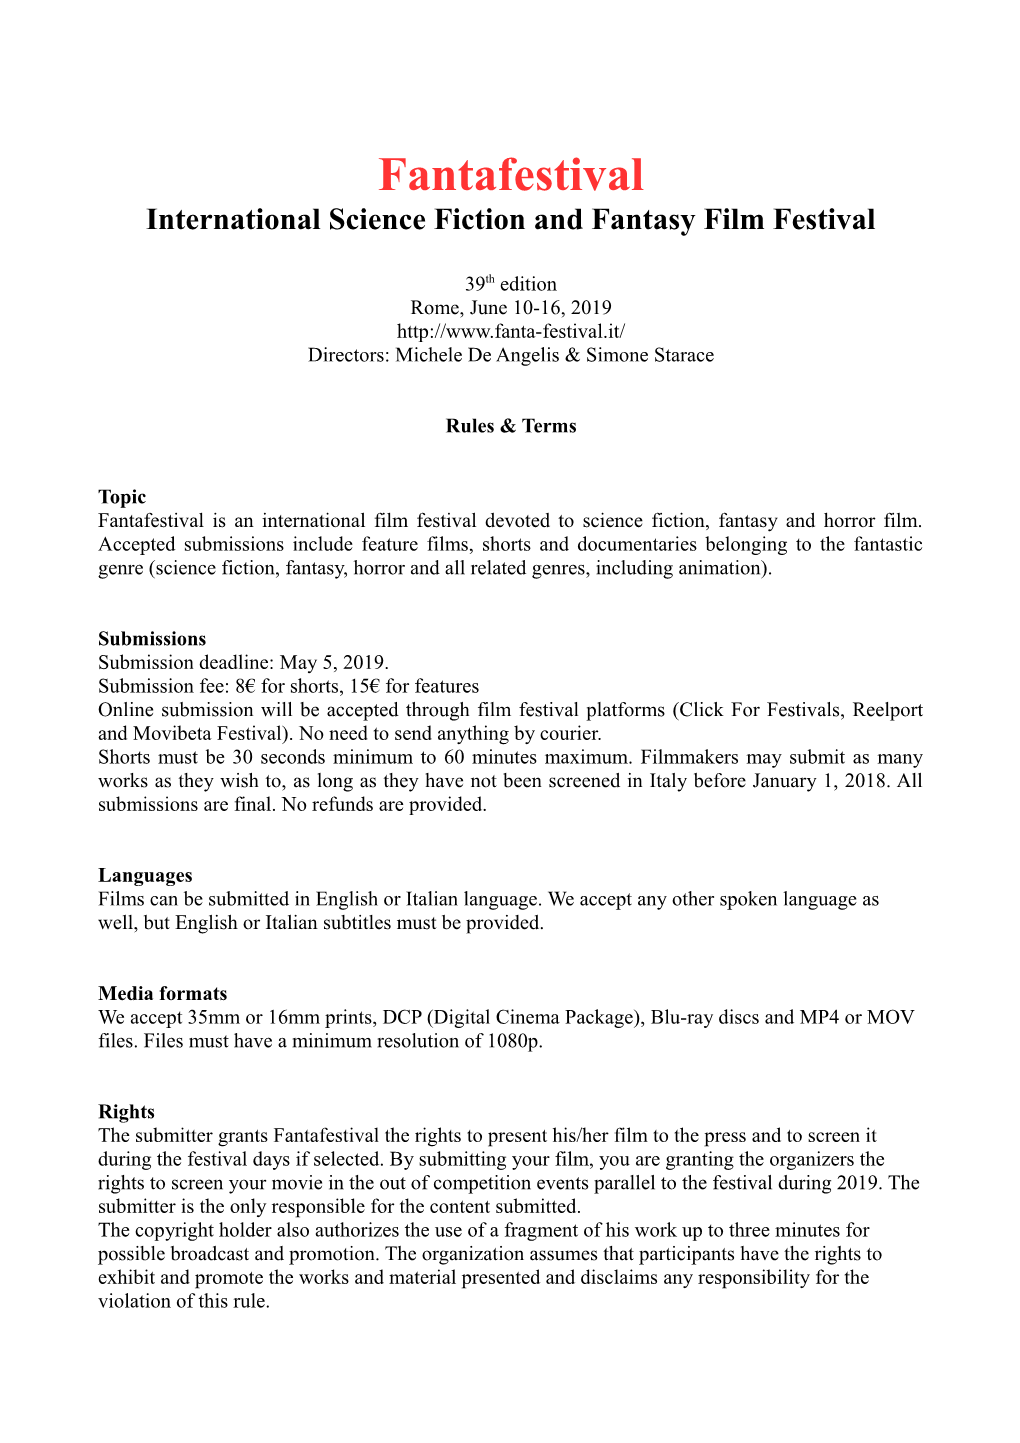 Fantafestival International Science Fiction and Fantasy Film Festival